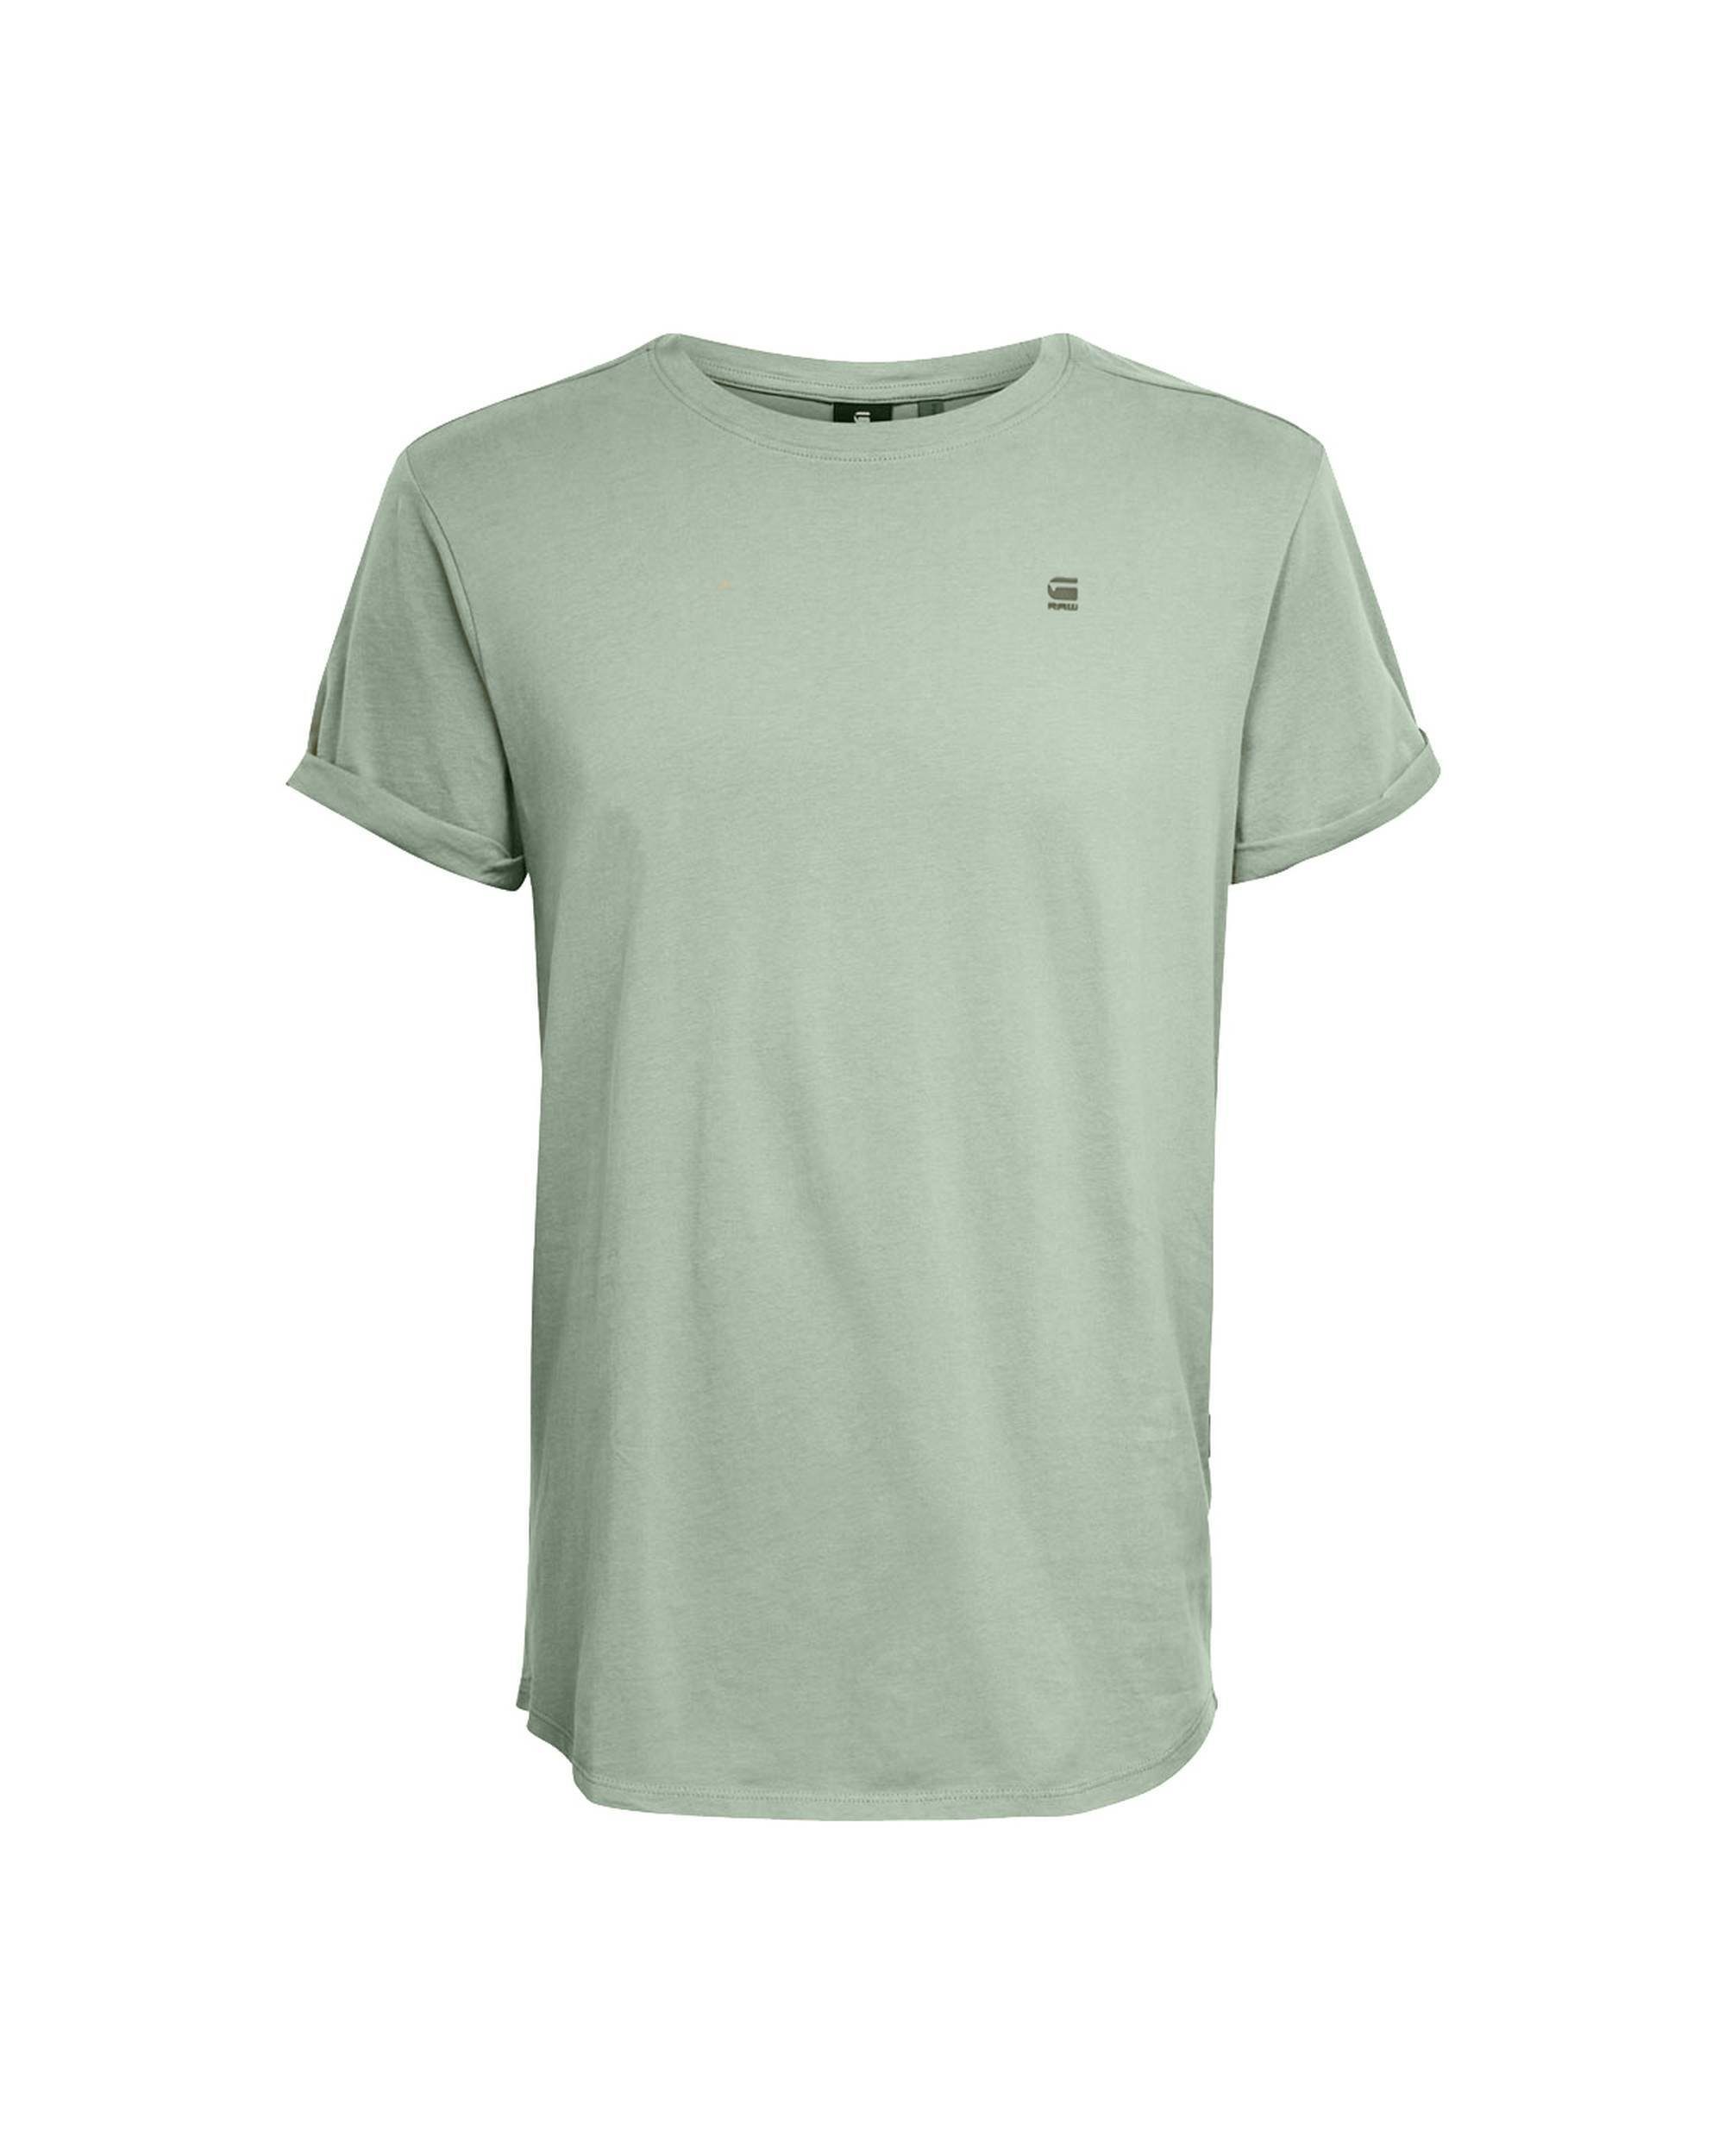 G-Star RAW T-Shirt Herren T-Shirt - Mintgrün Organic Rundhals, Lash, Cotton